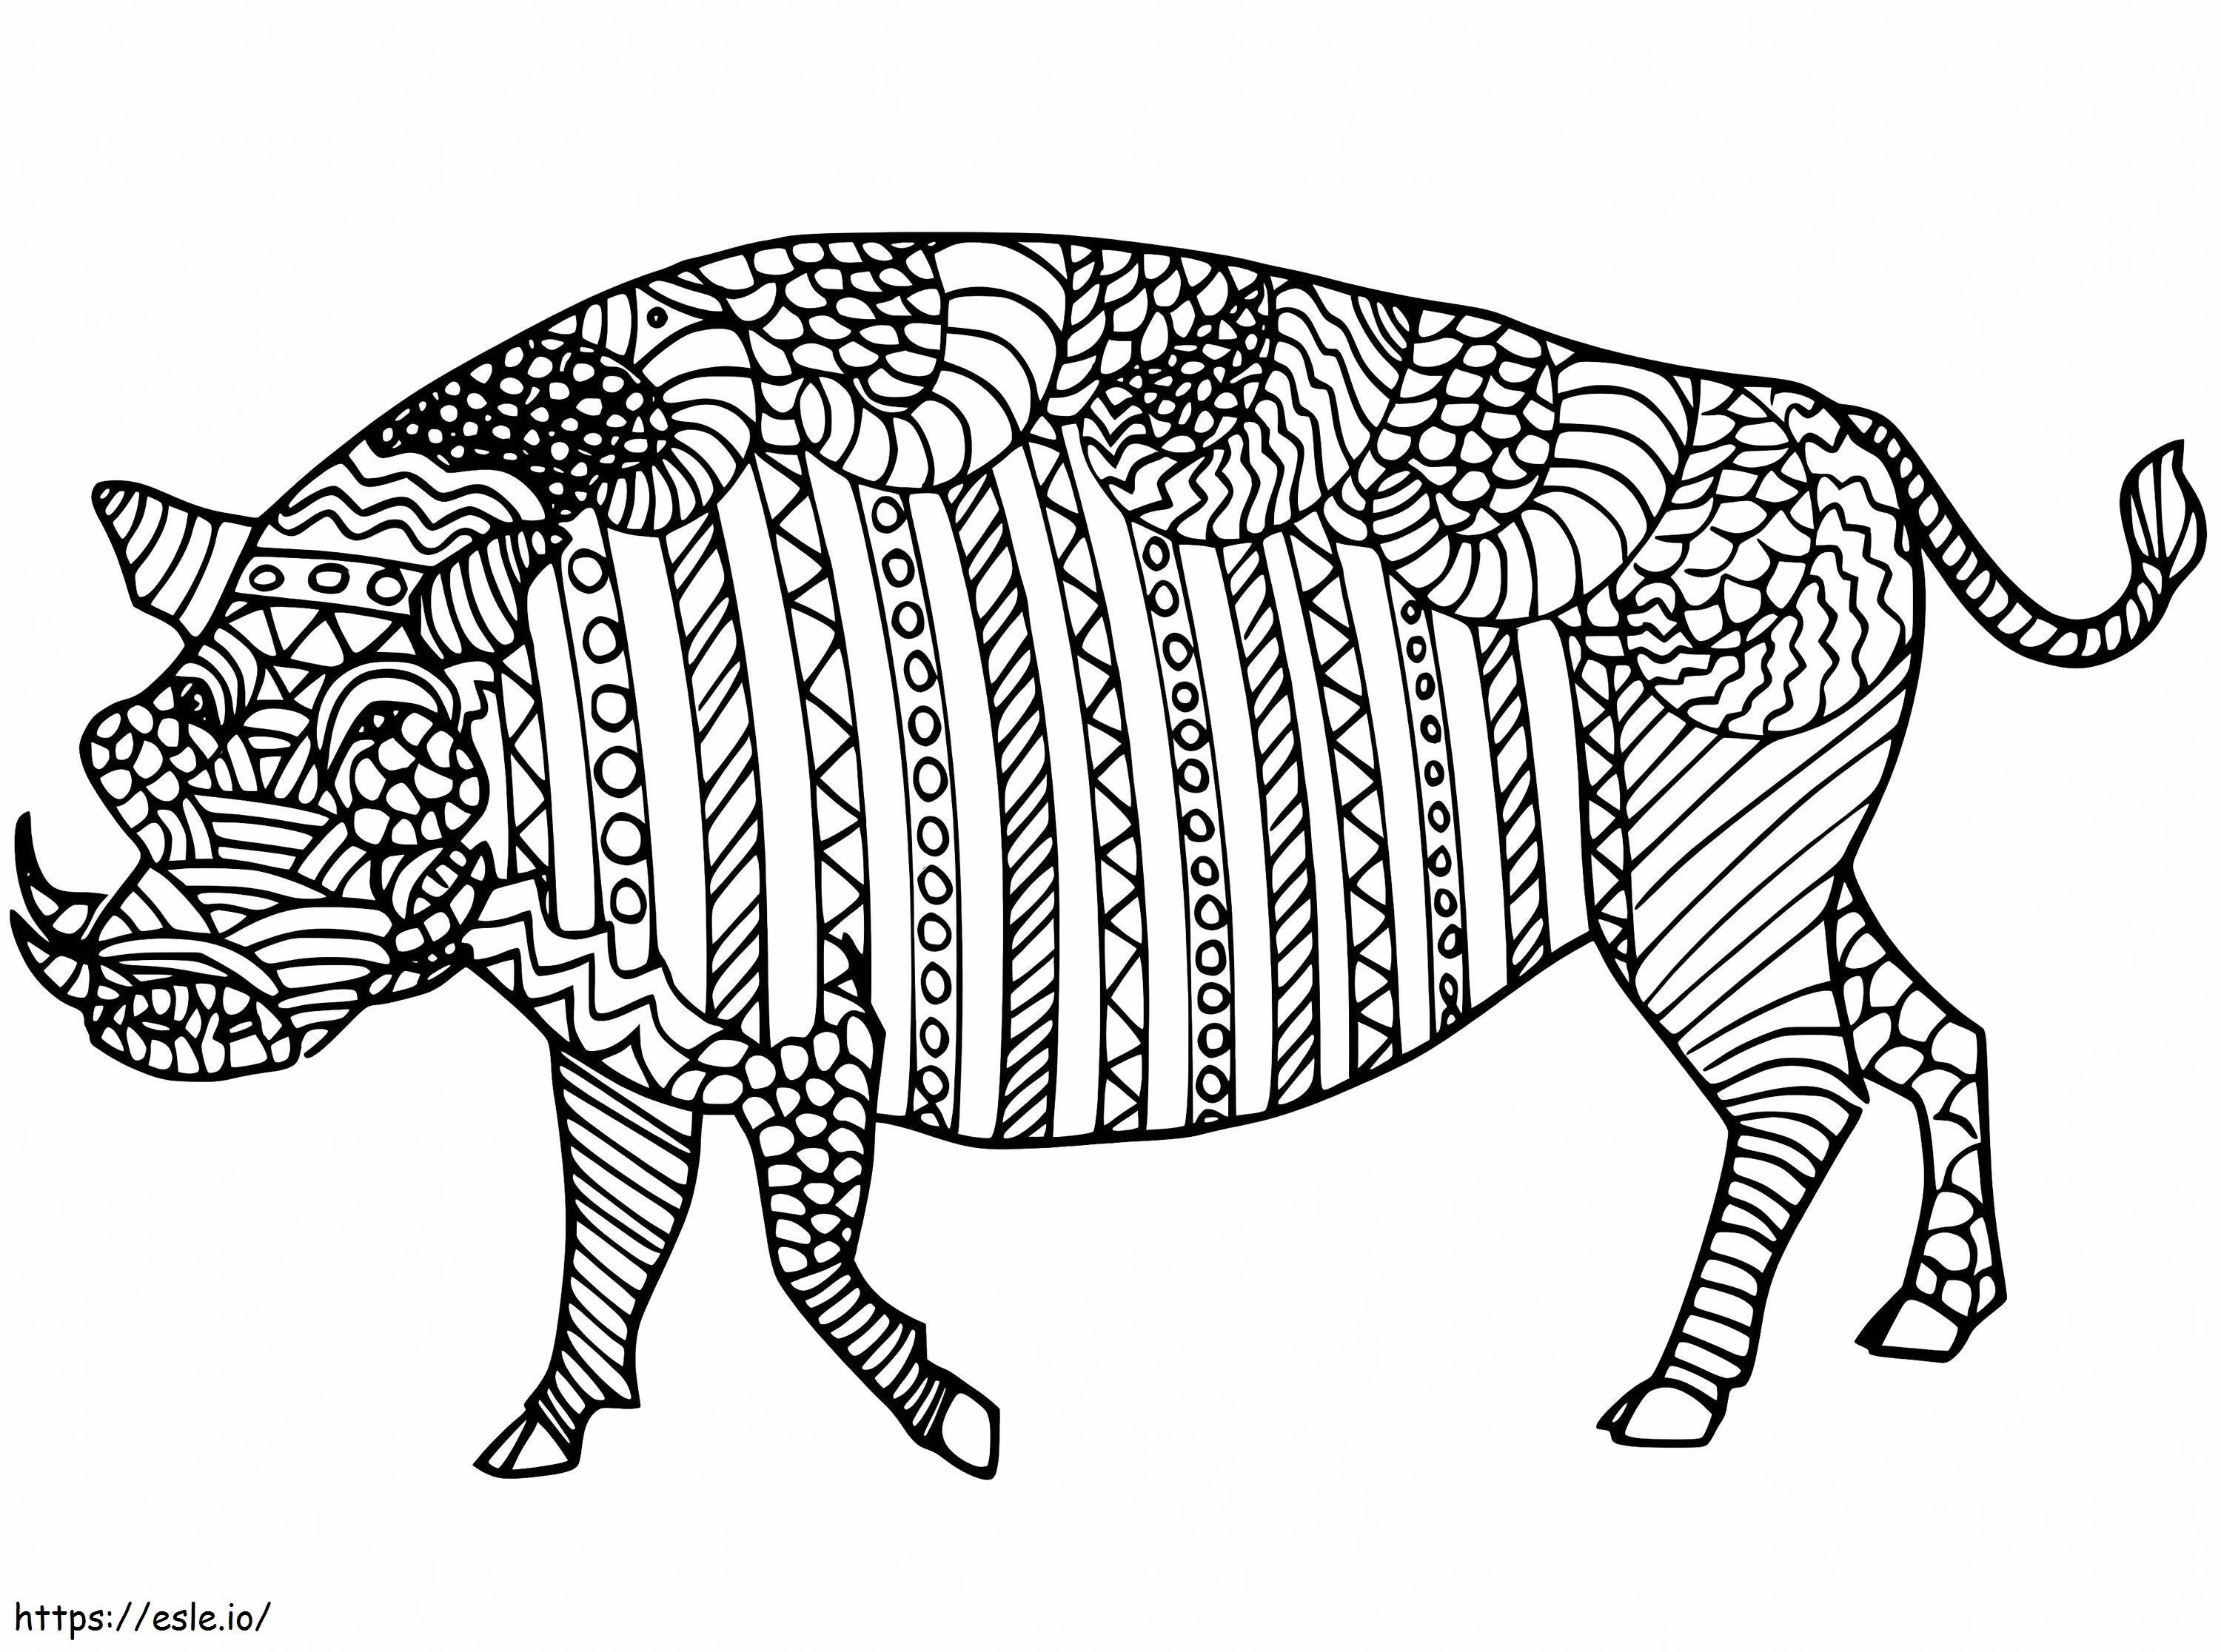 Zentangle Warthog coloring page